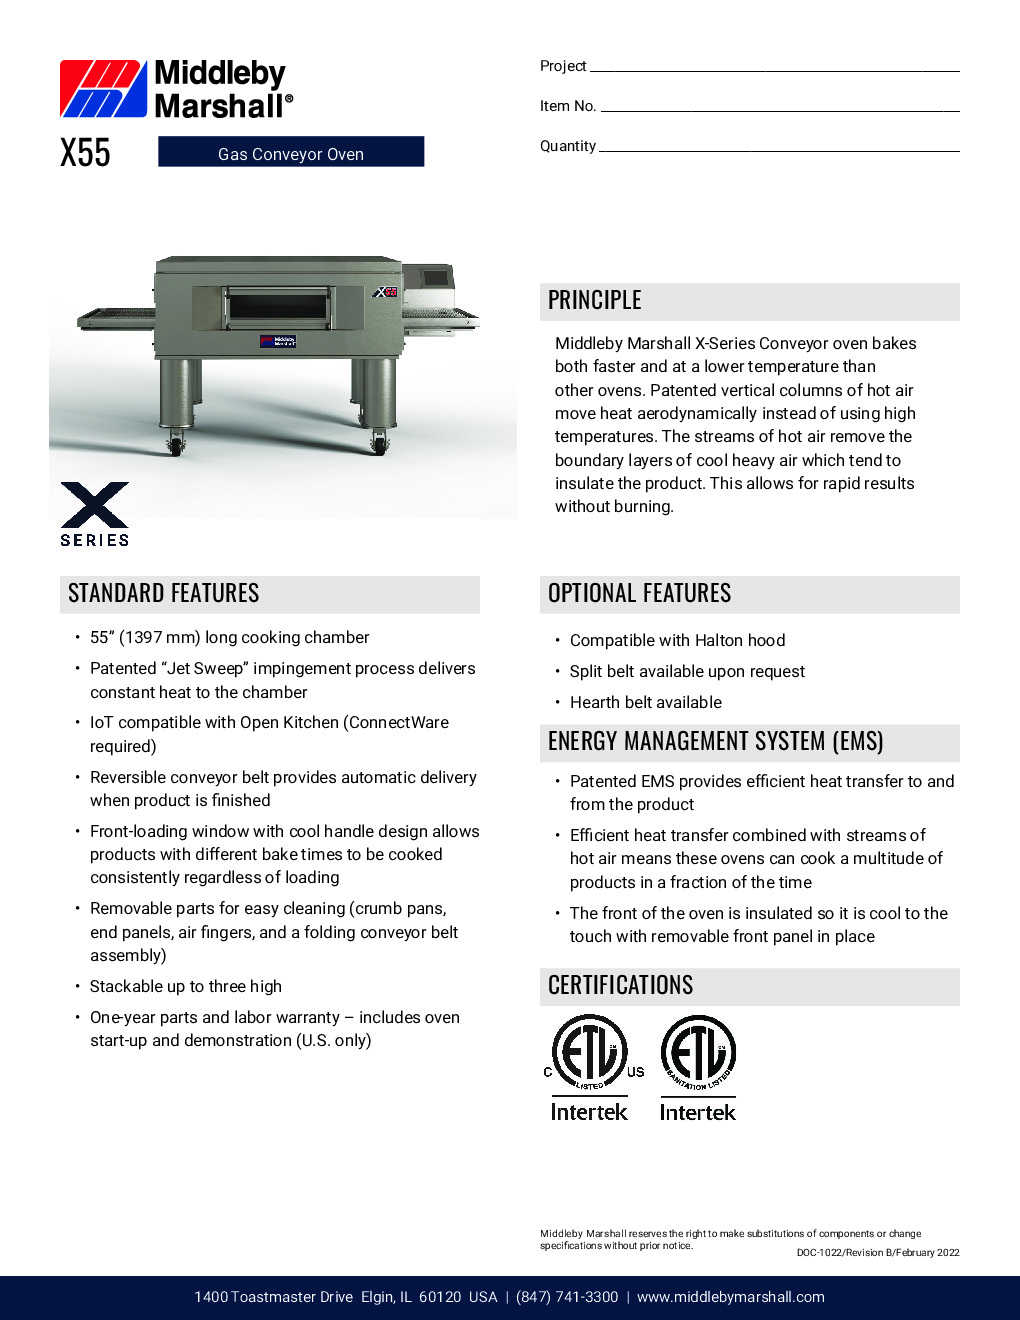 Middleby Marshall X55-3 Conveyor Gas Oven